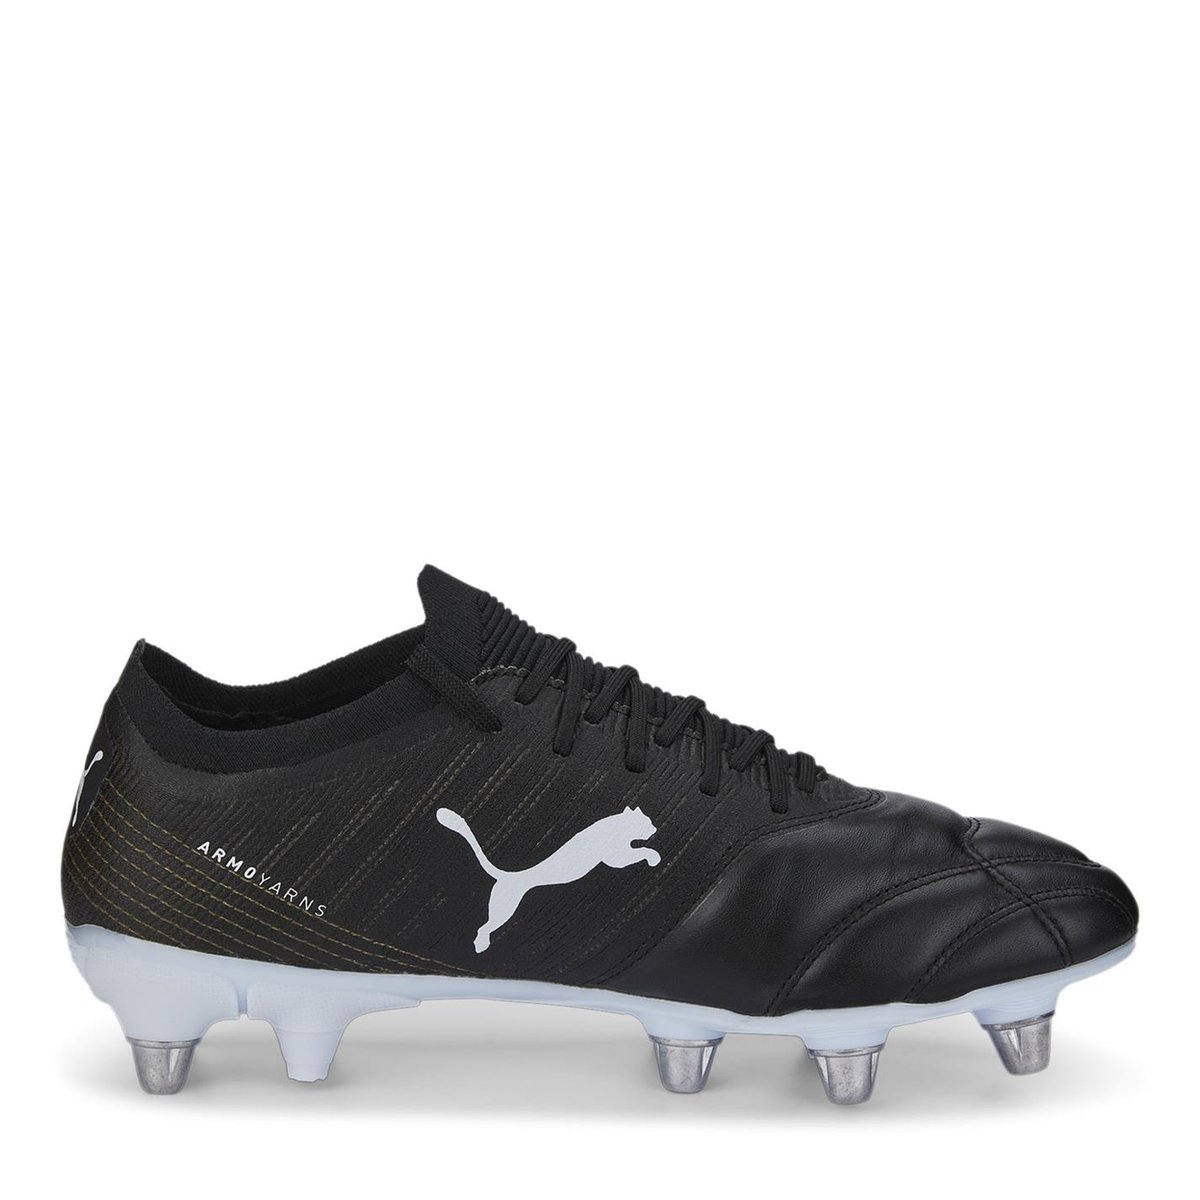 y3 football boots